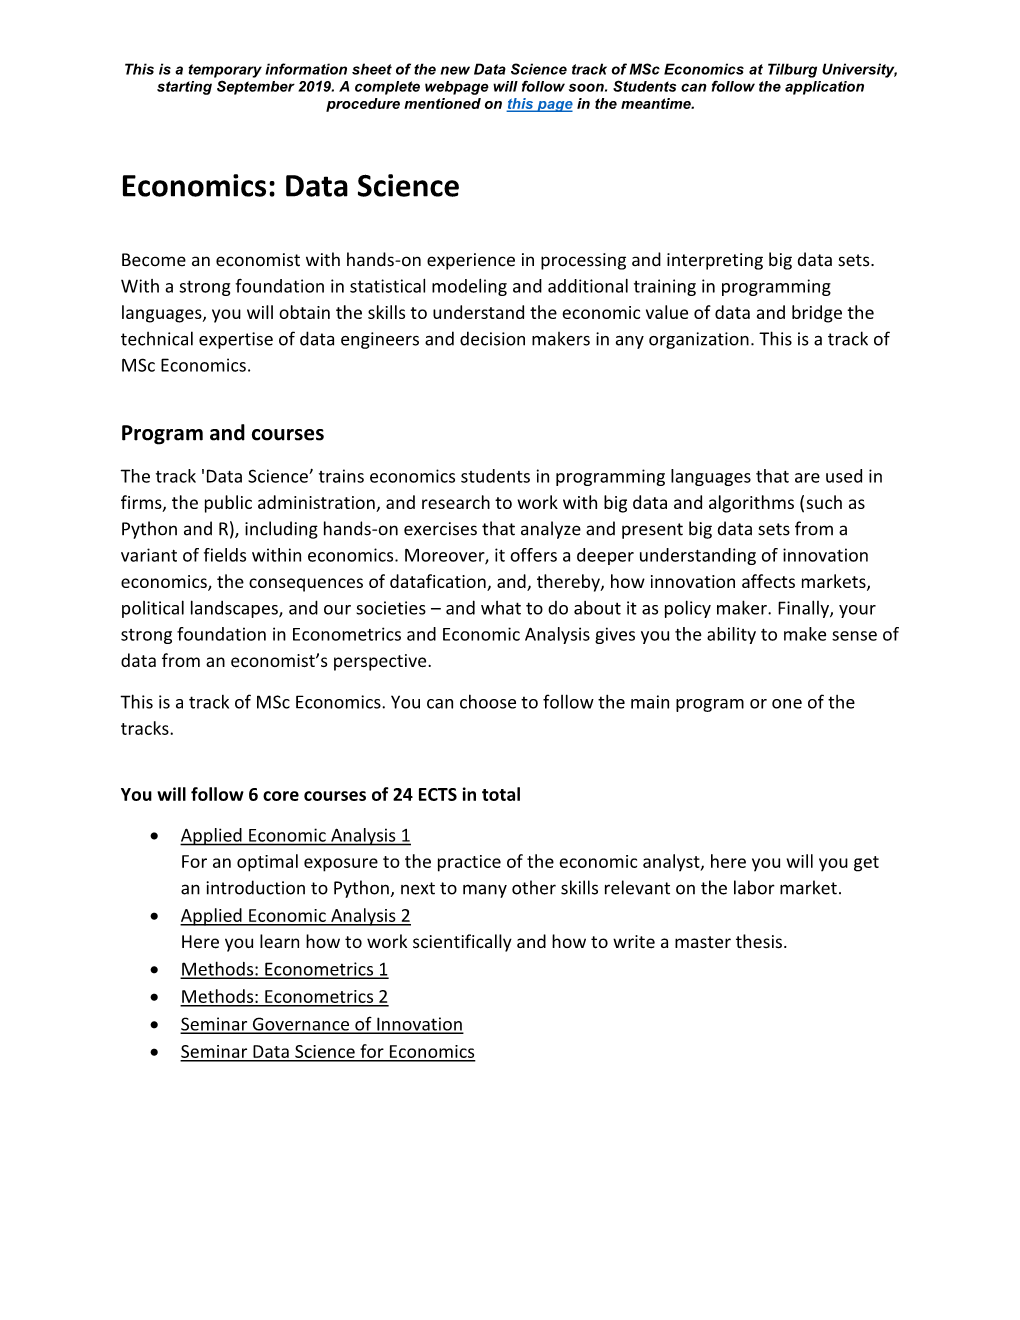 Economics: Data Science